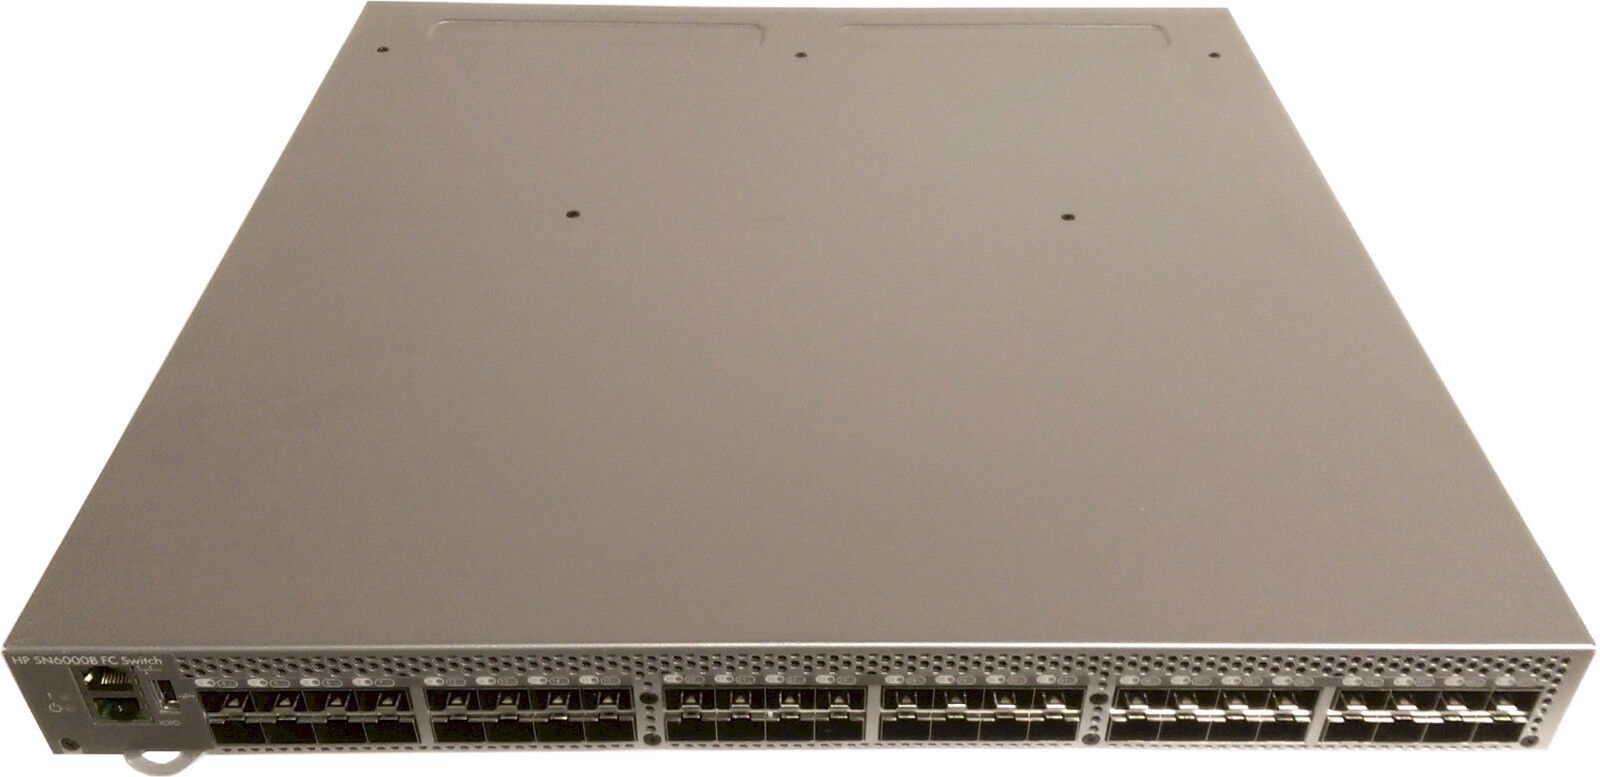 HP SN6000B / Brocade 6510 48-Port / 24-Active 16Gb Fibre Channel SAN Switch 